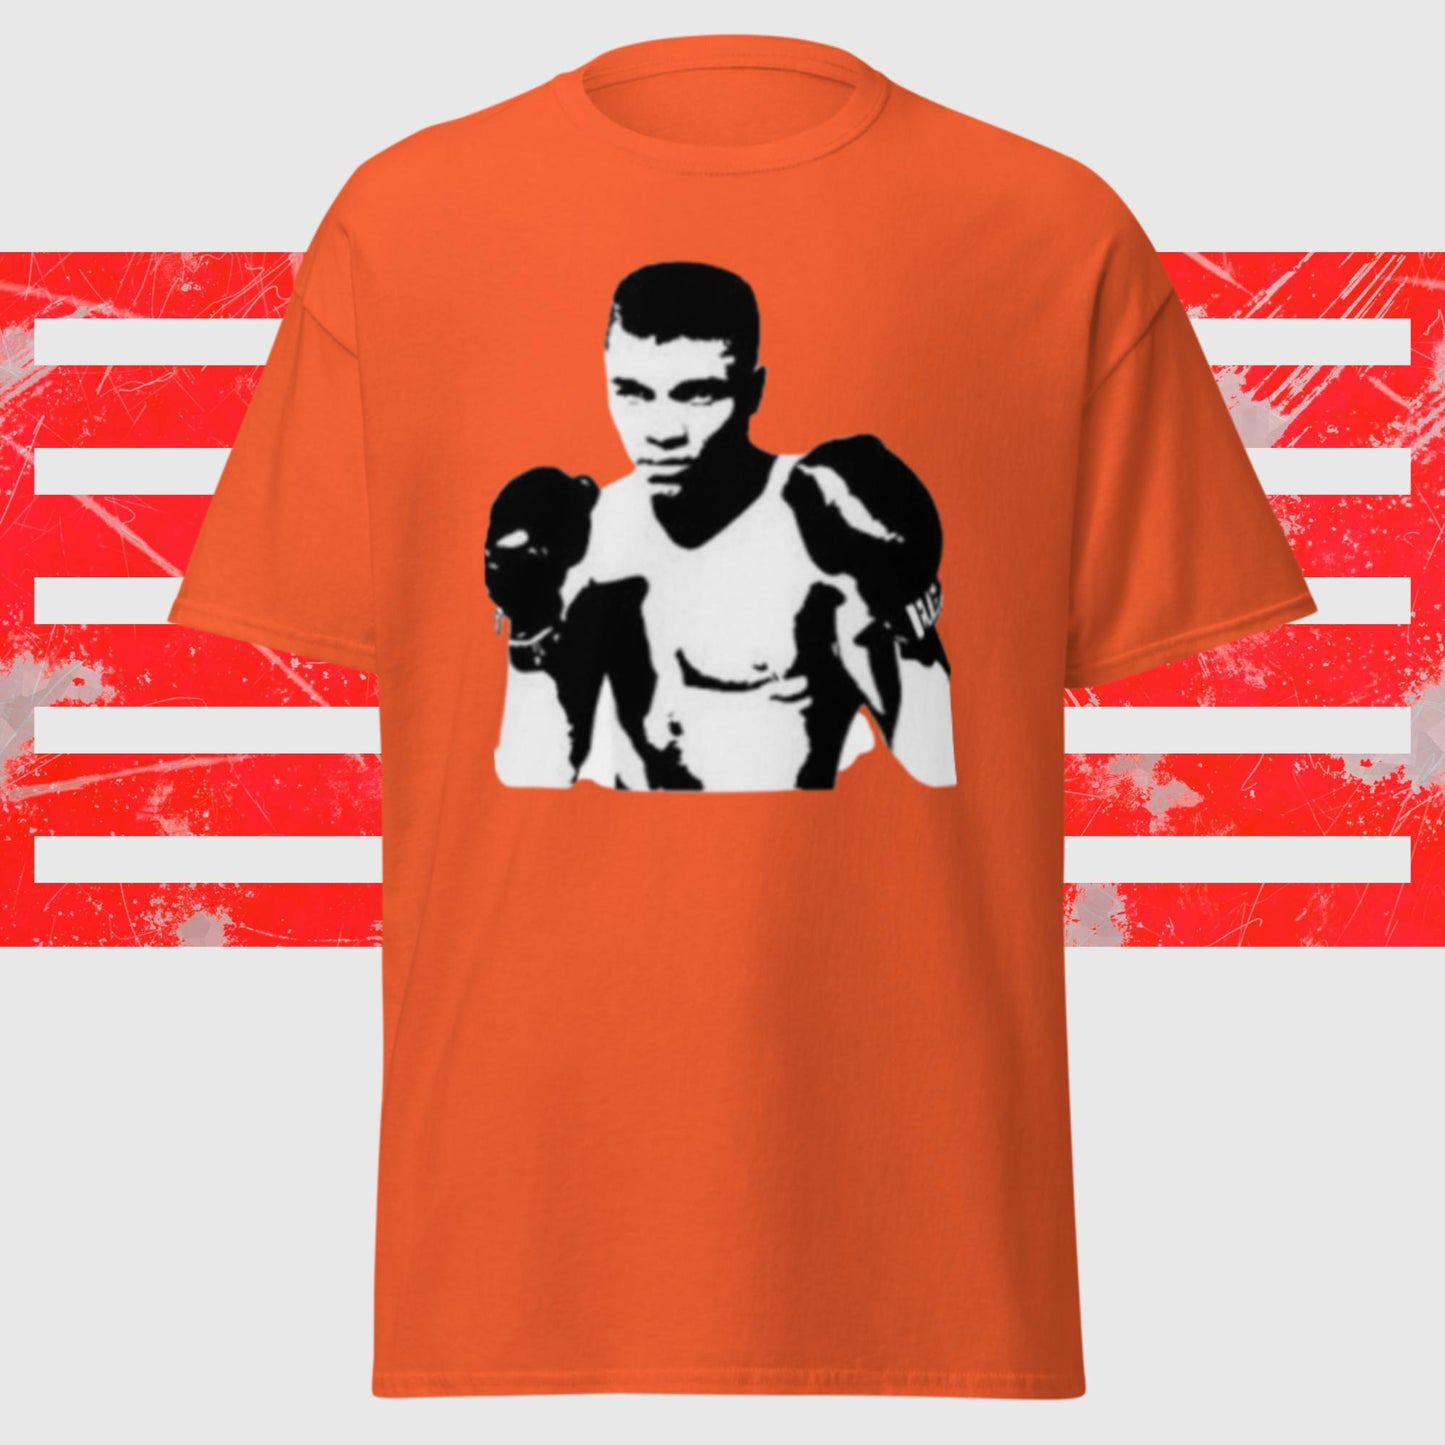 Sharp by Design 'Heroes' - Muhammad Ali - Men's classic tee